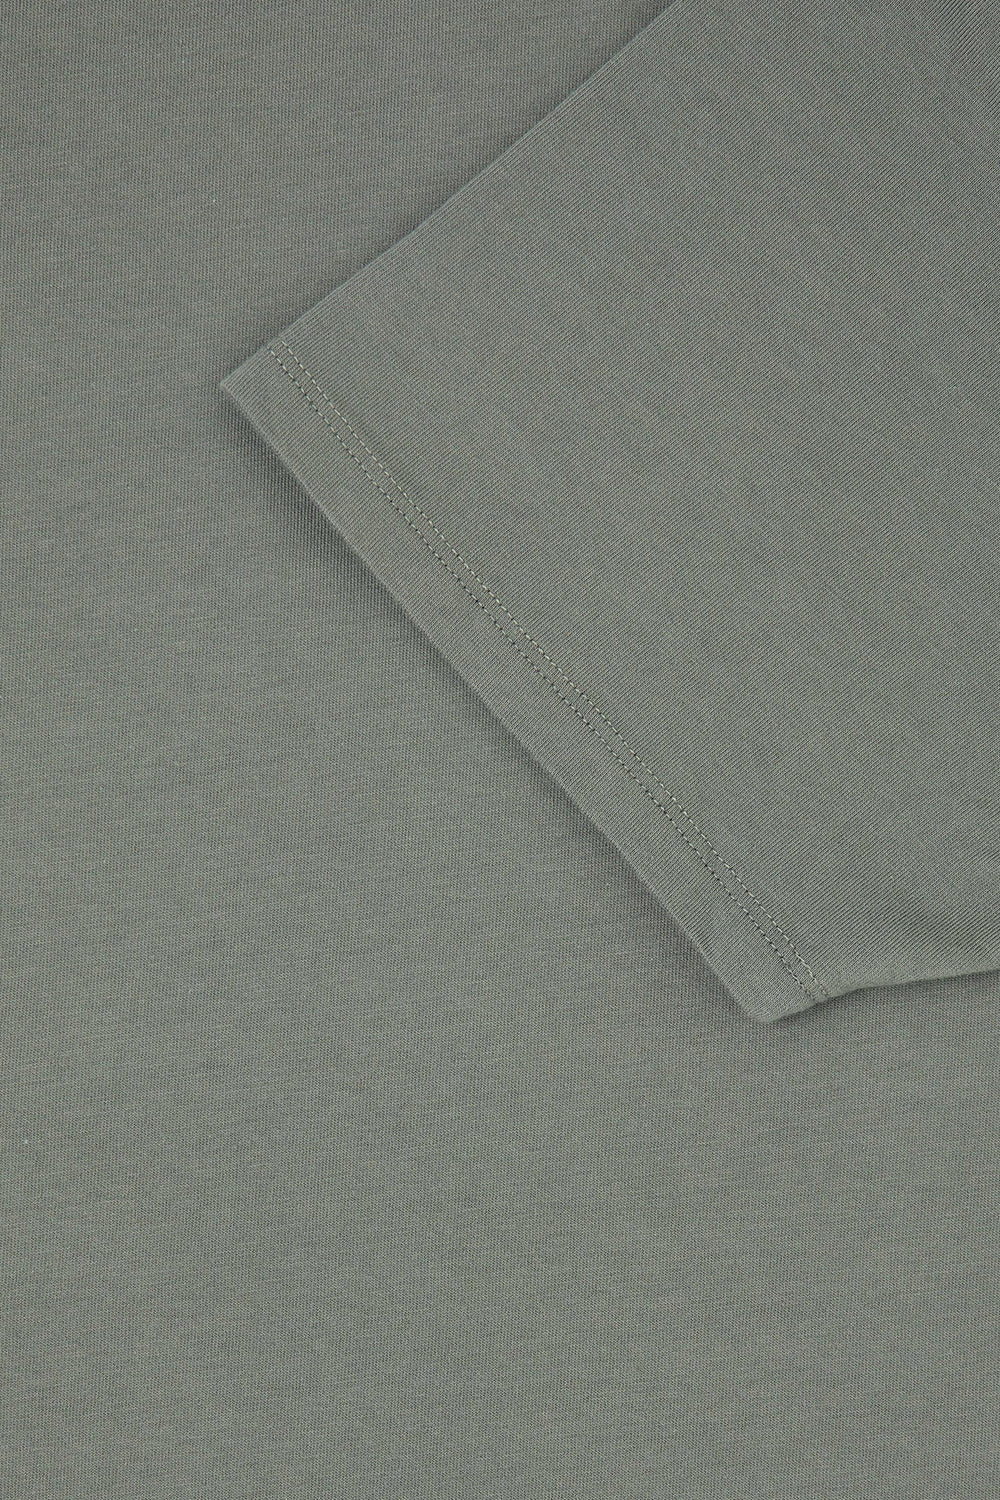 Edwin Pocket T-Shirt (Castor Gray)